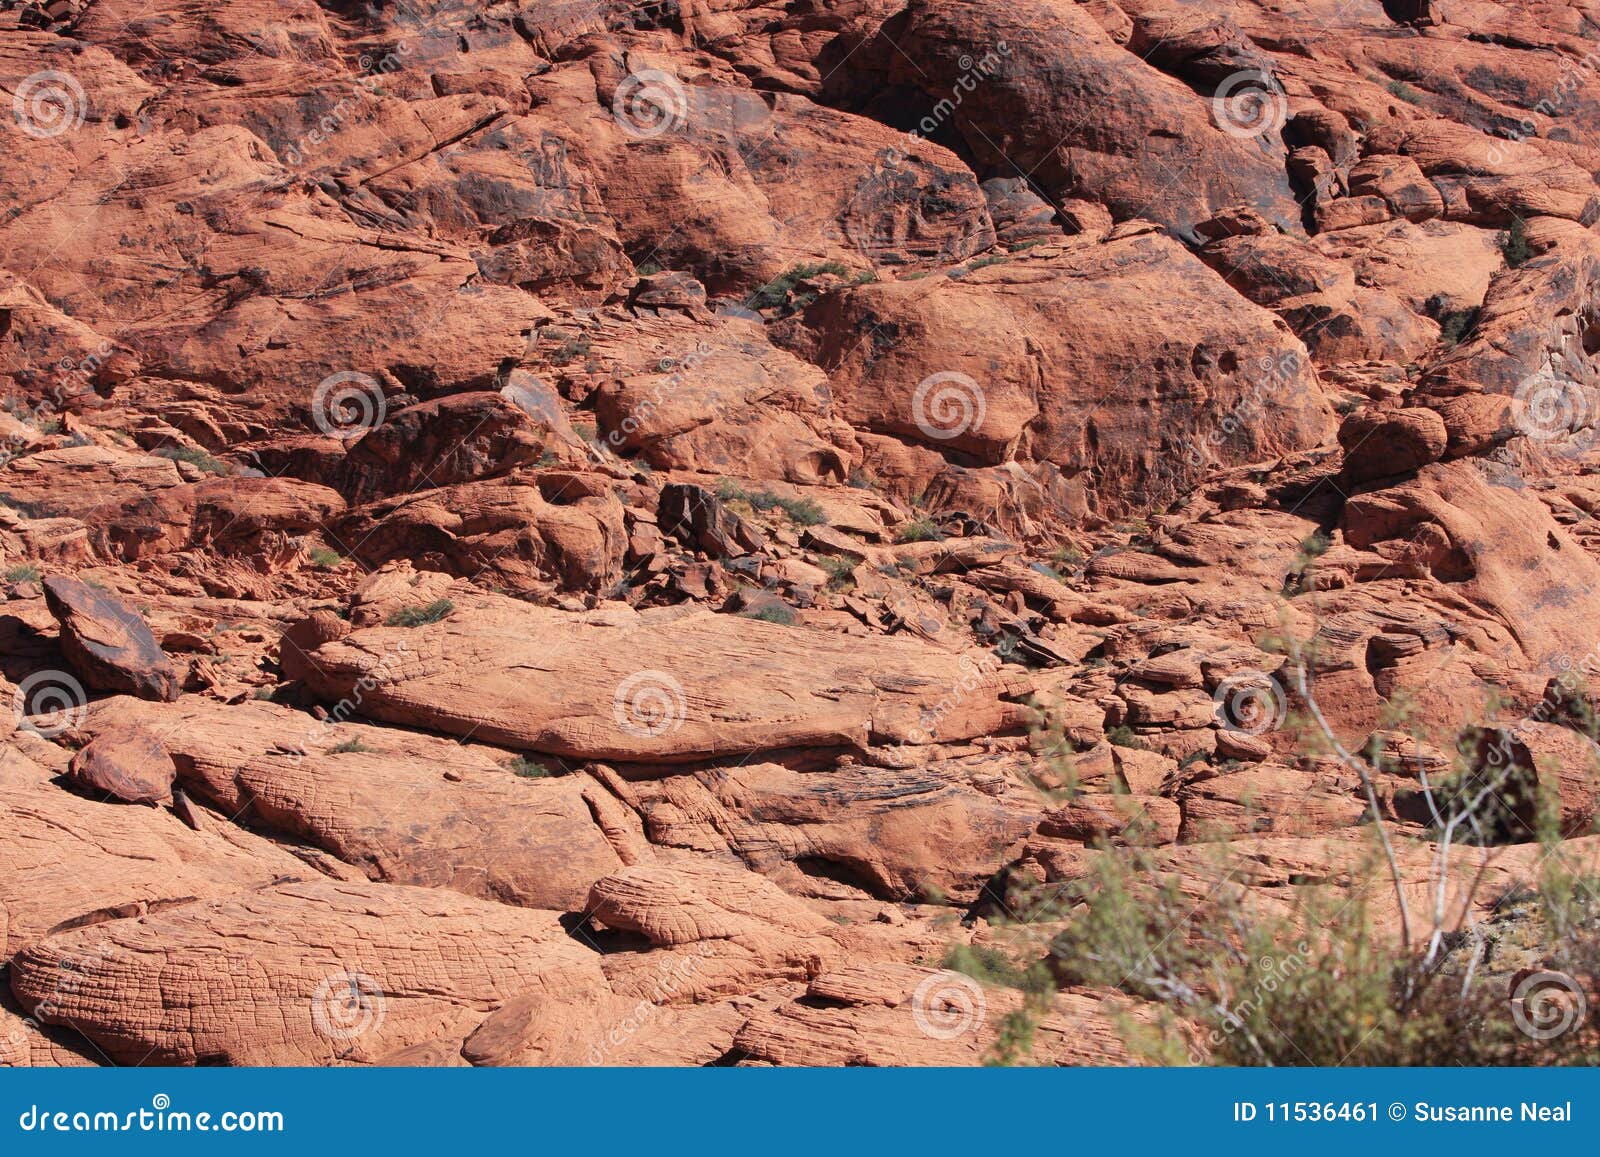 steep rock at red rock canyon in las vegas